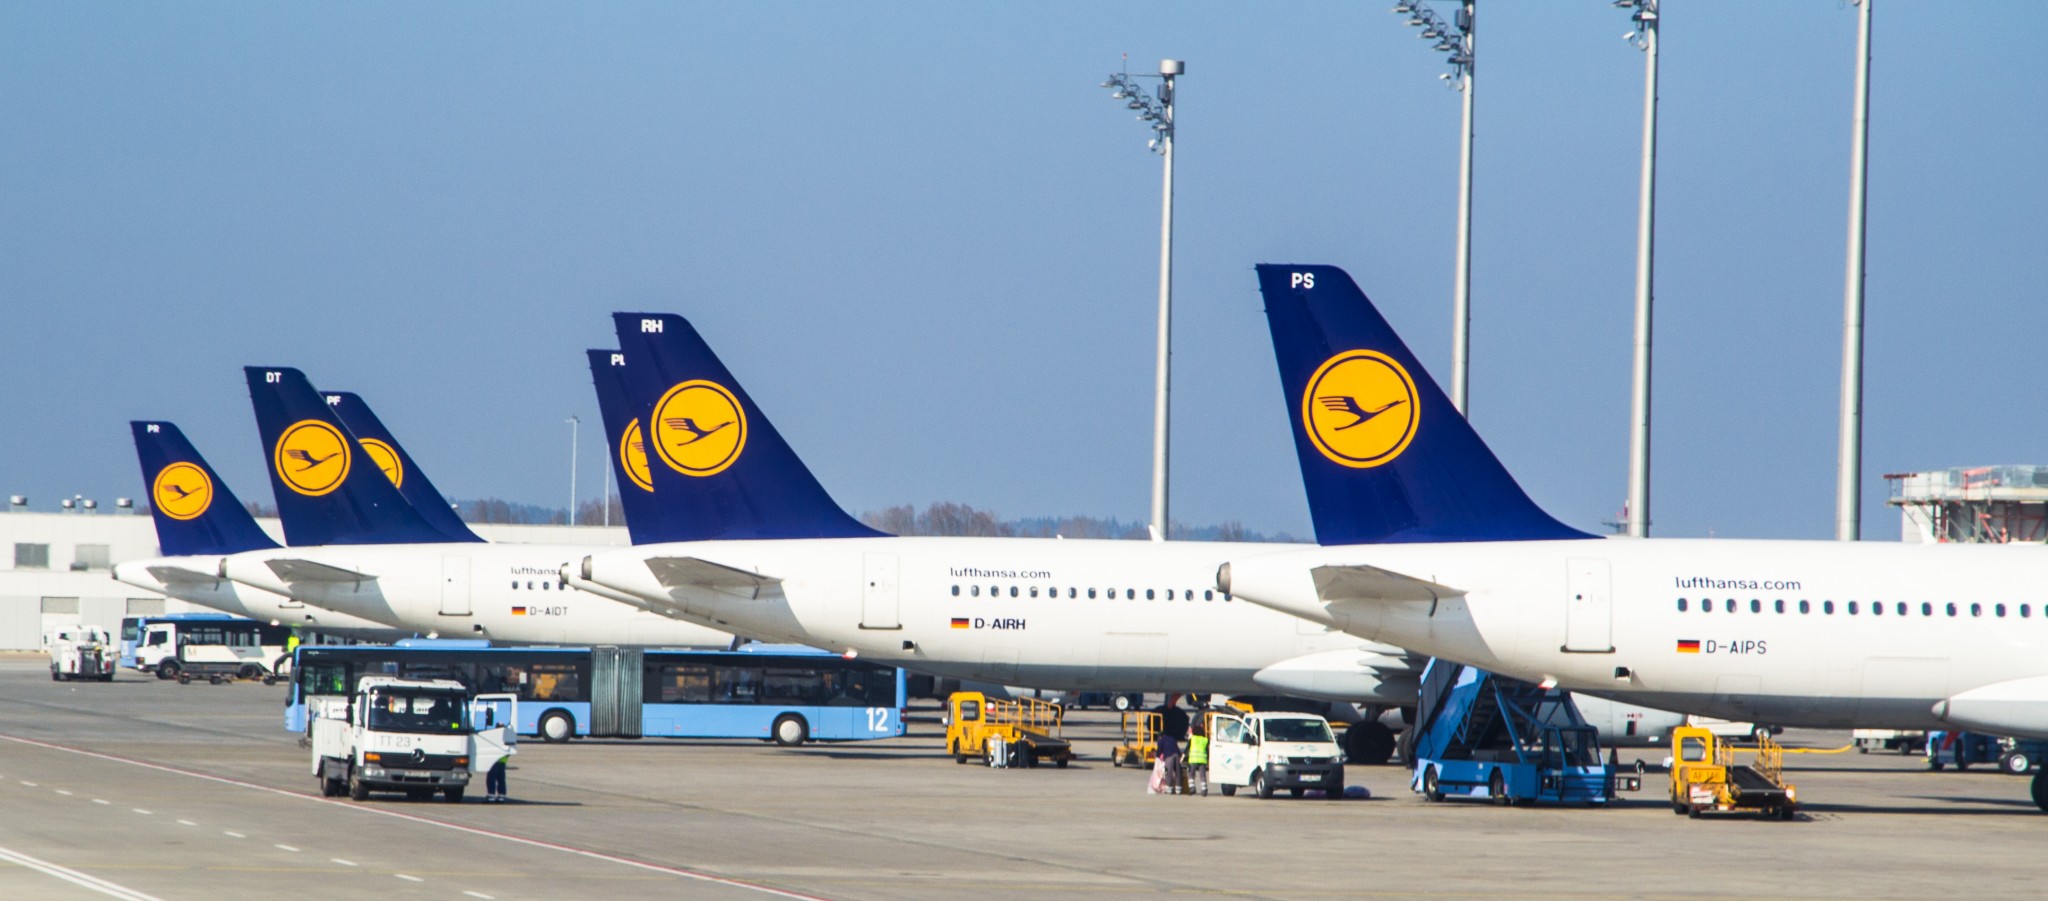 Lufthansa hires new senior director sales UK, Ireland & Iceland